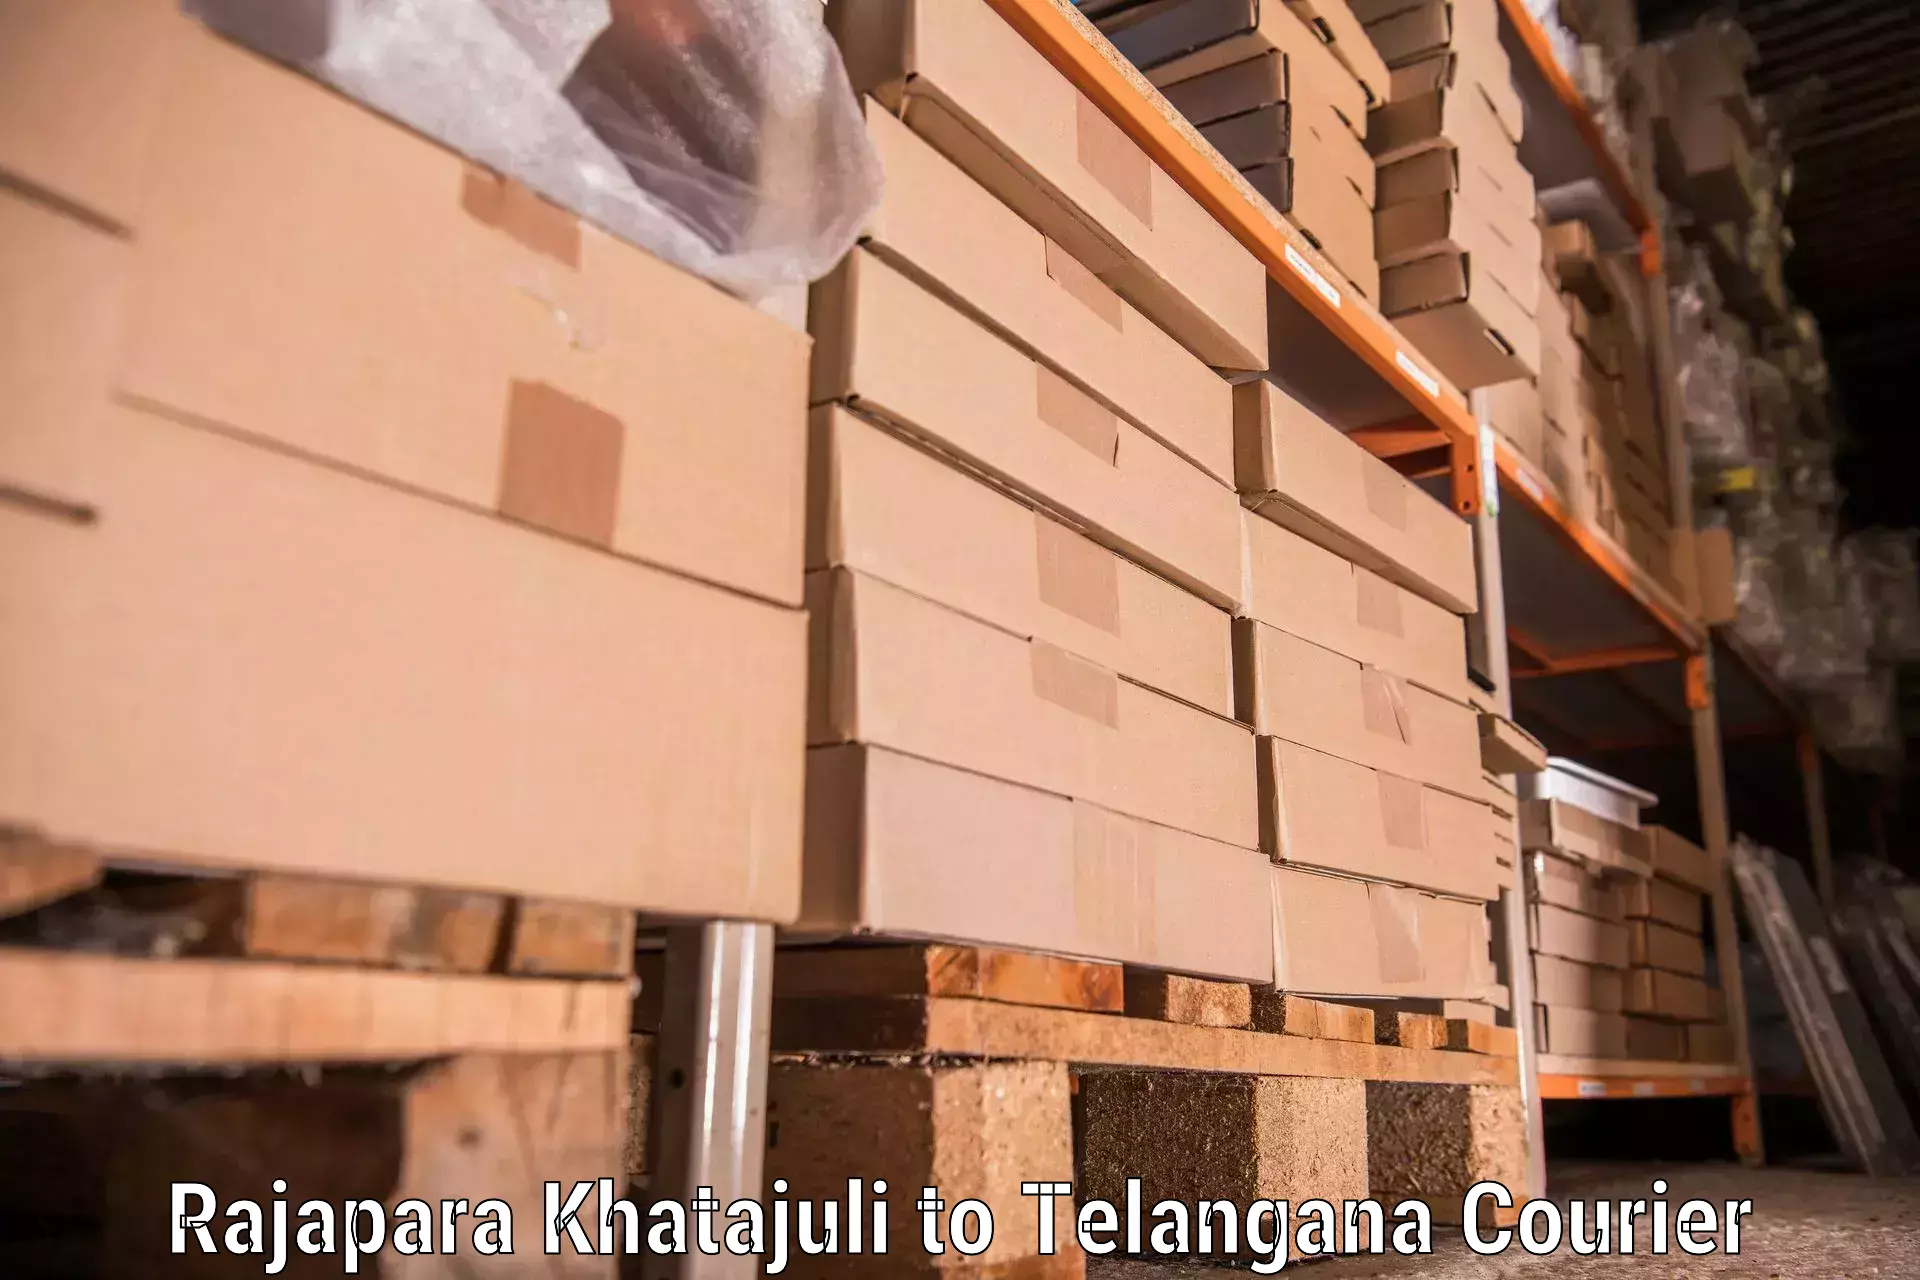 Household goods transporters Rajapara Khatajuli to Medak